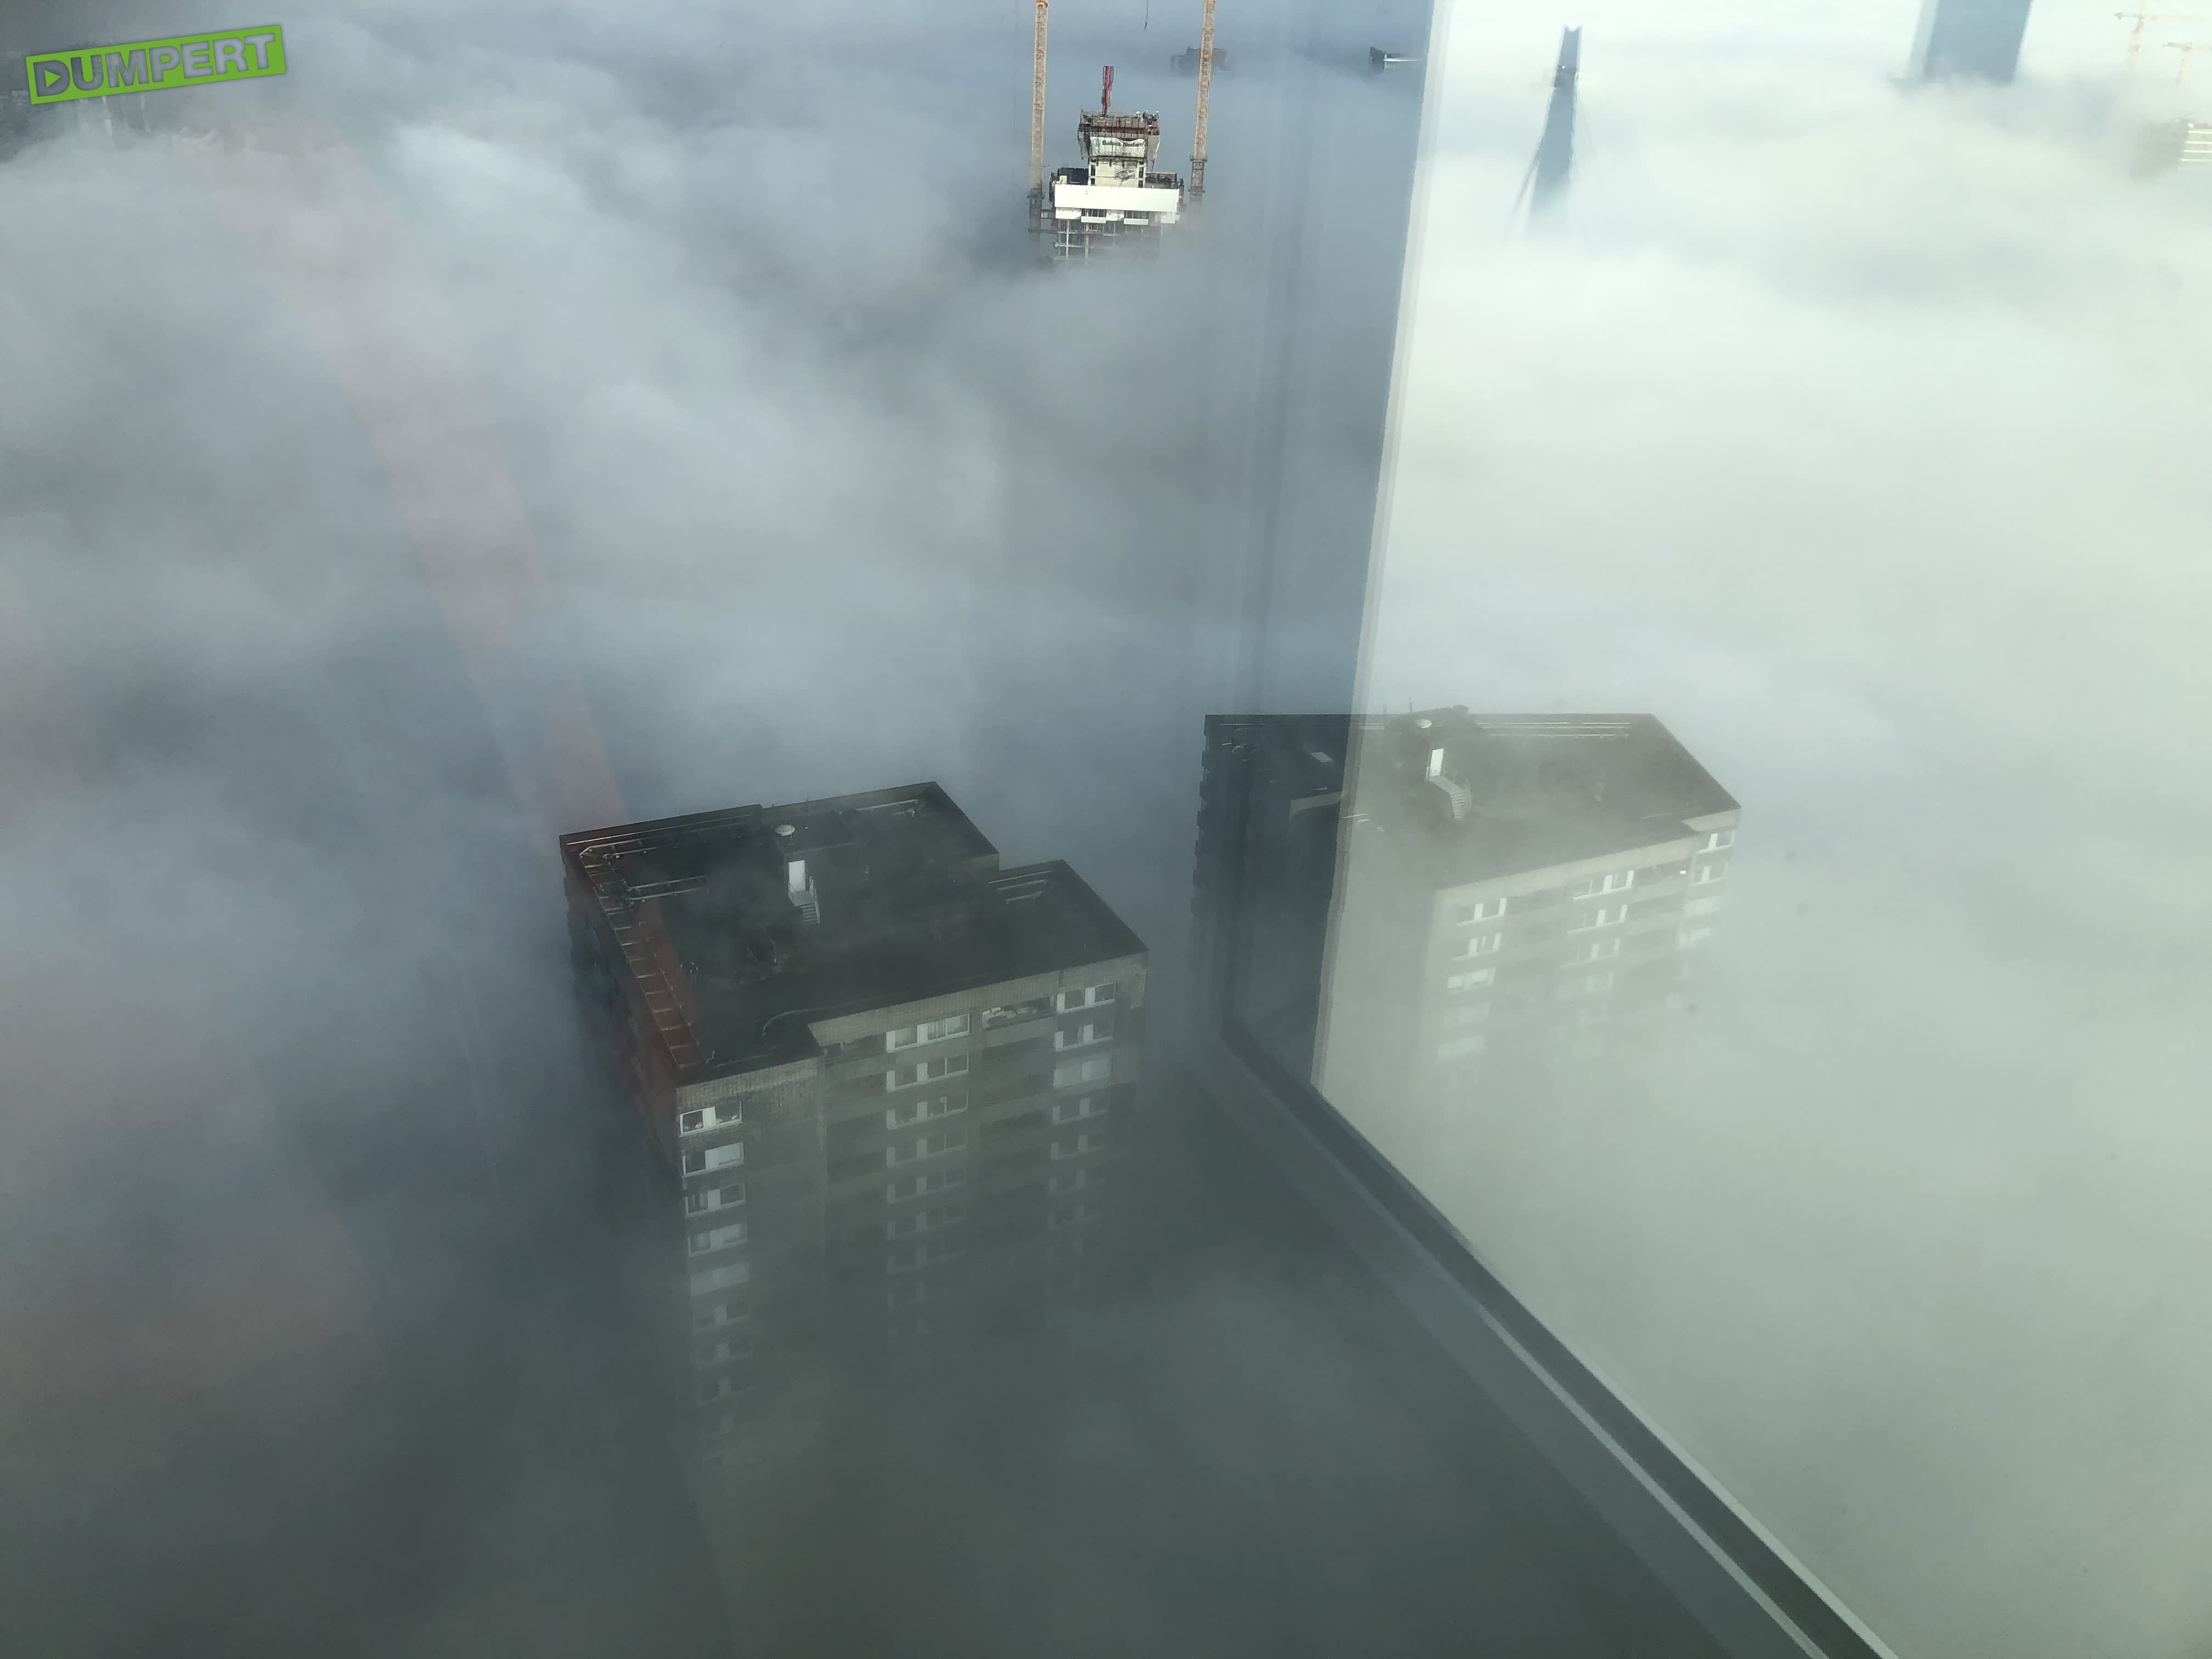 Rotterdam in de mist